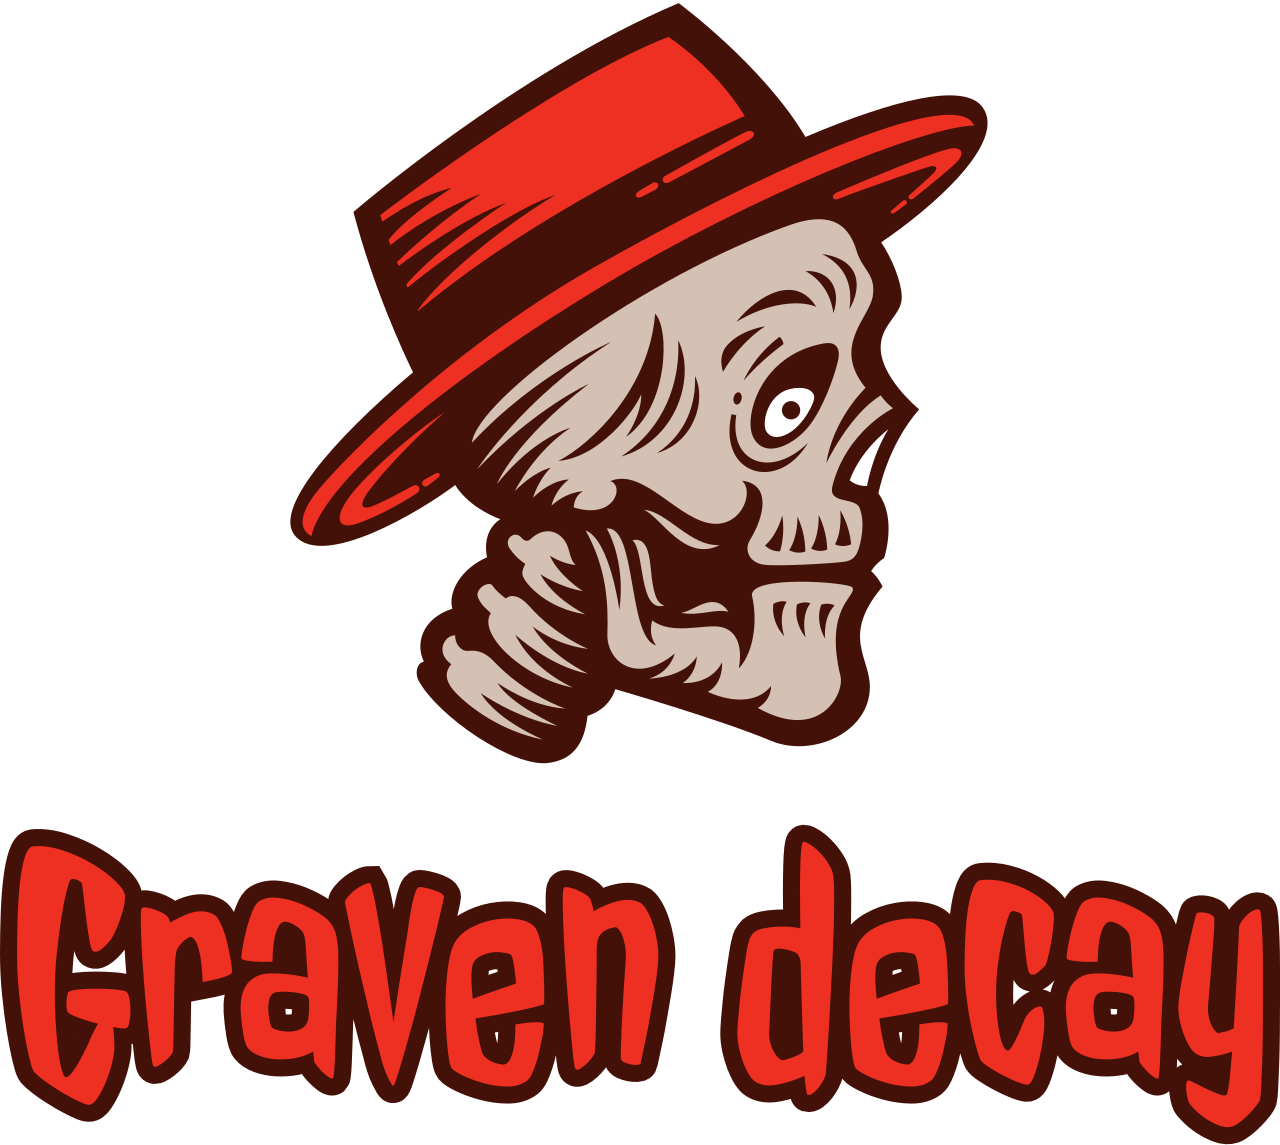 Graven decay's web page